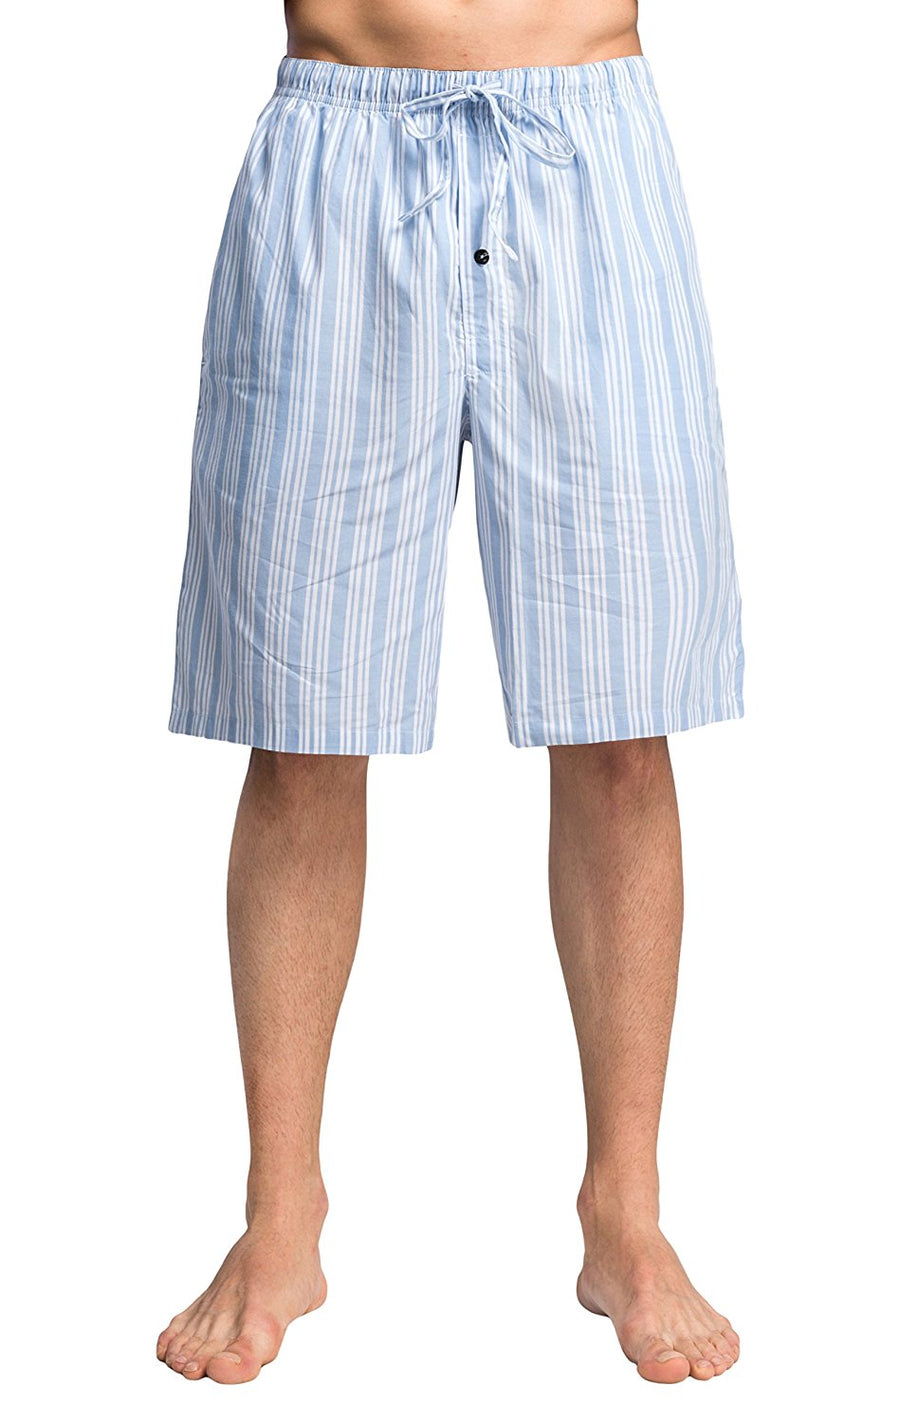 CYZ Men's 100% Cotton Plaid Woven Pajama Shorts Lounge Shorts Sleep Shorts